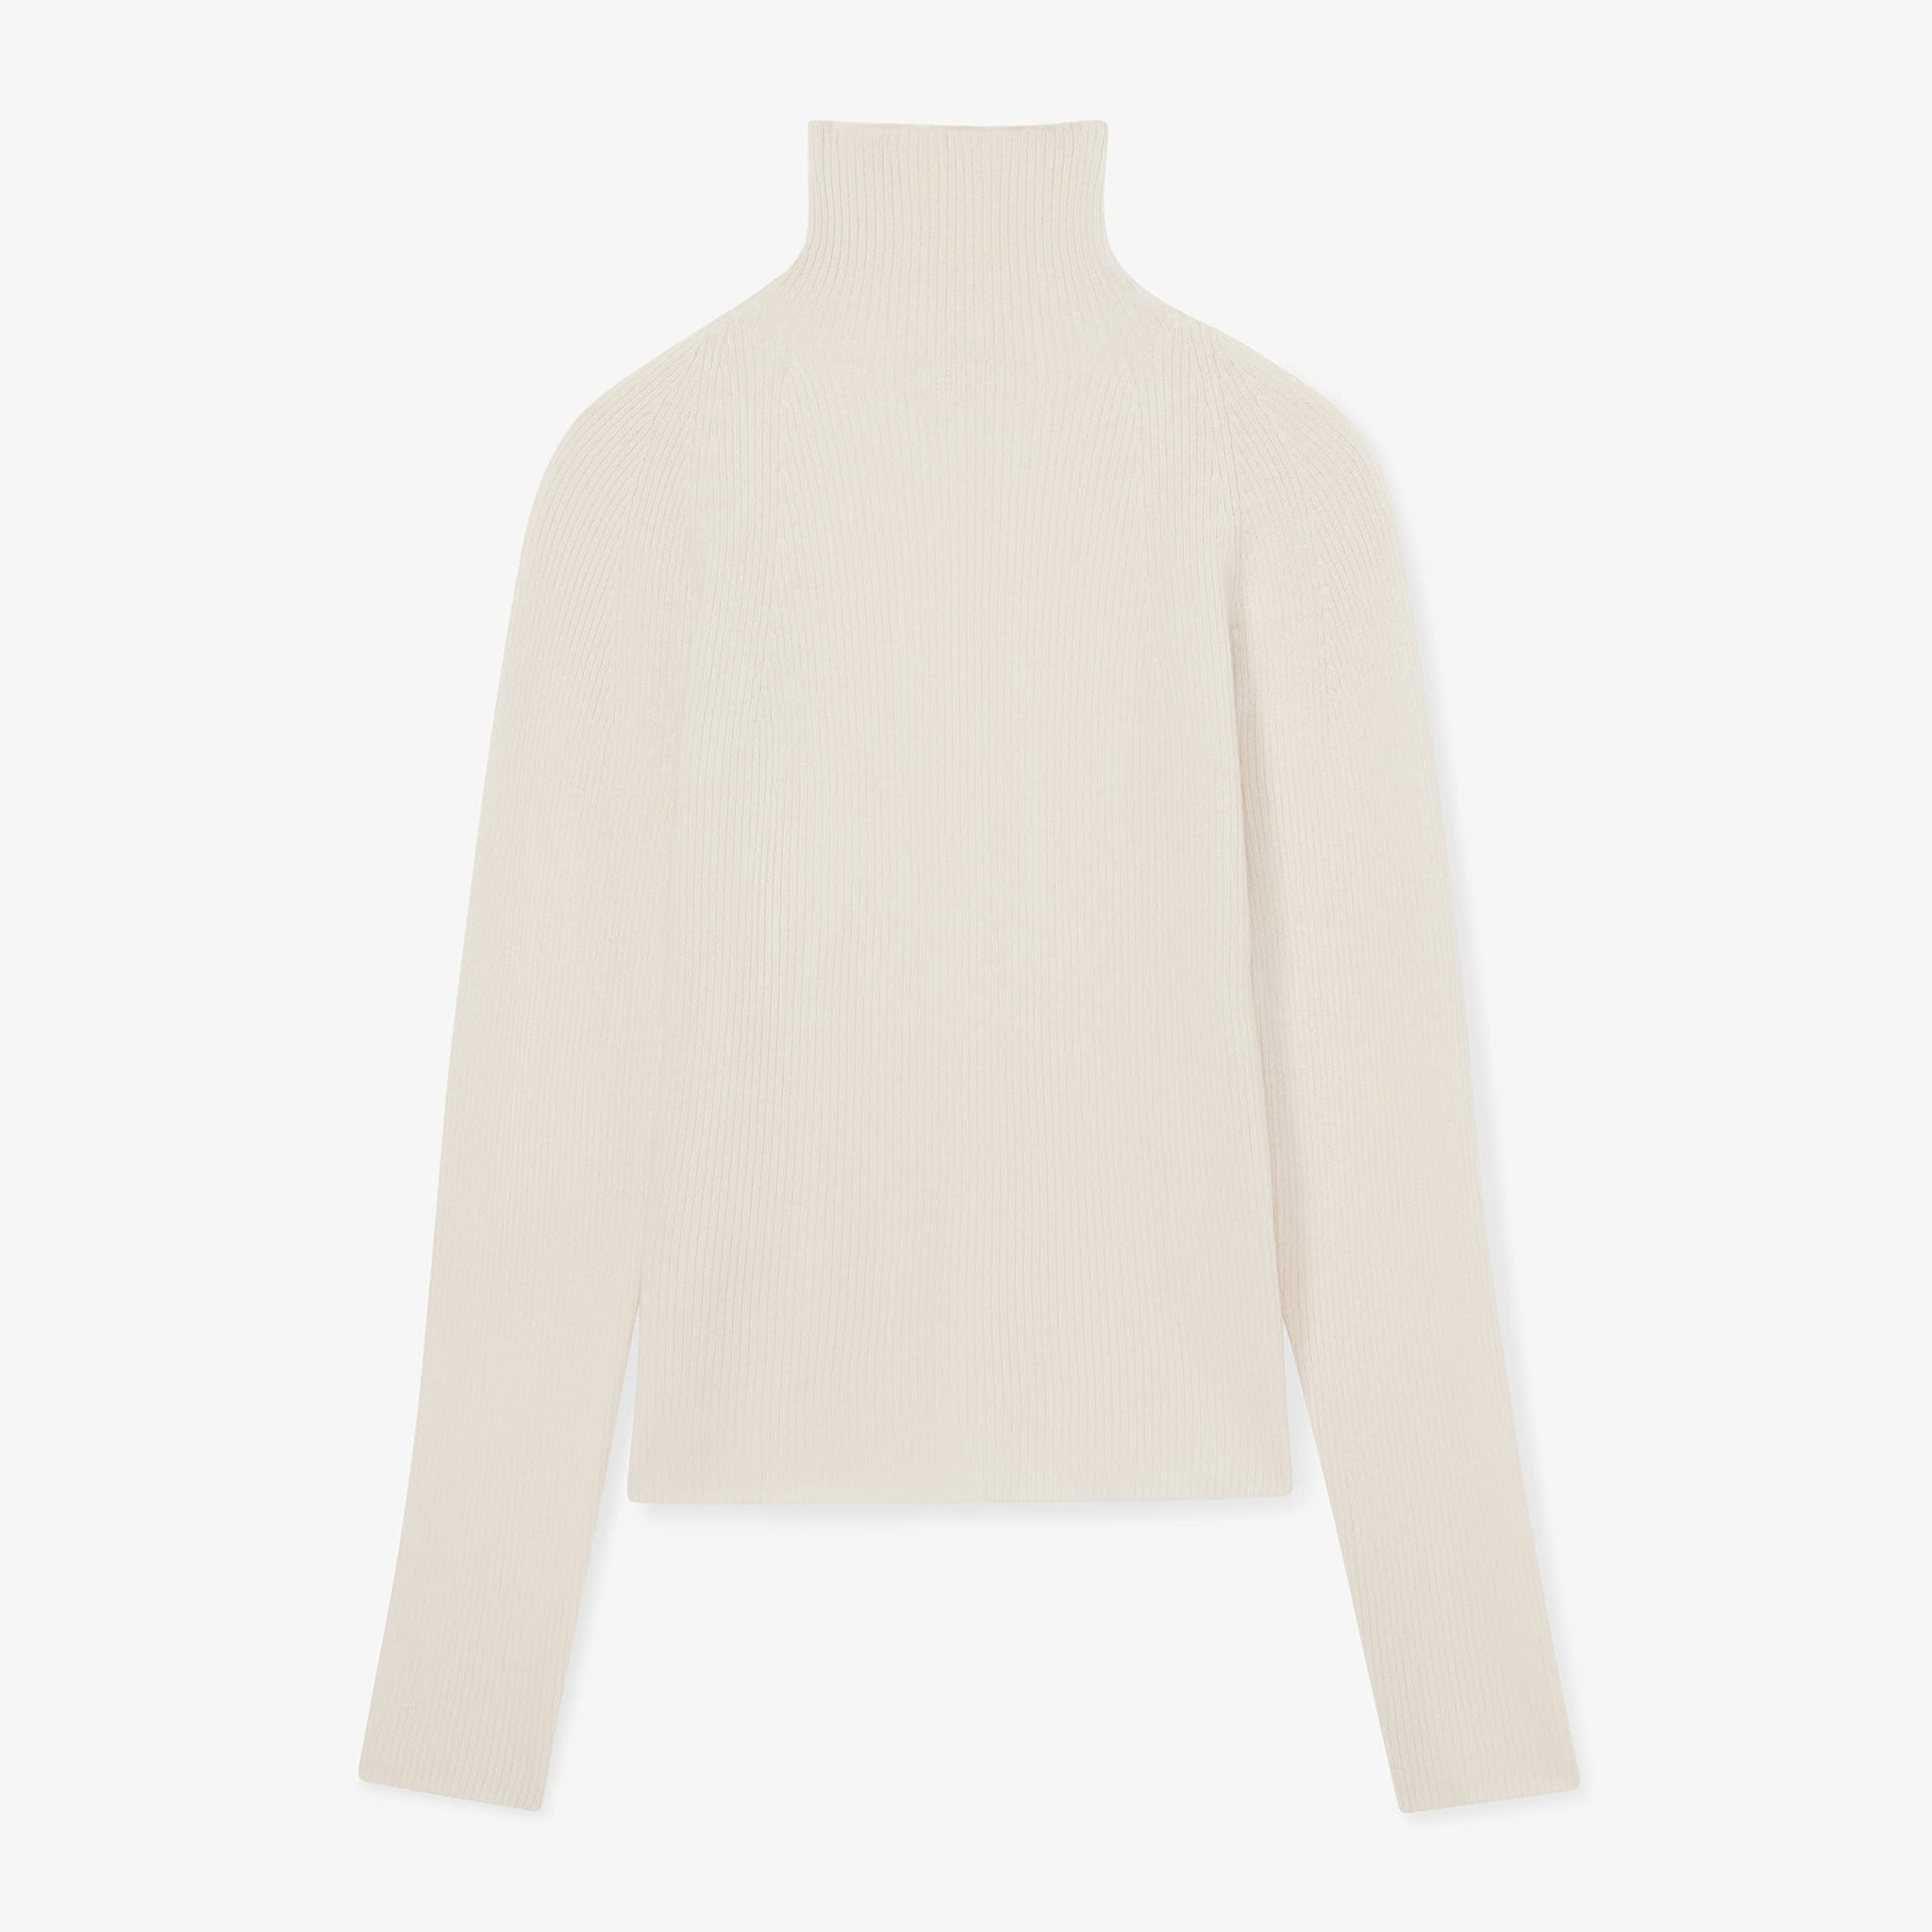 packshot image of the mckenzie sweater in light cream